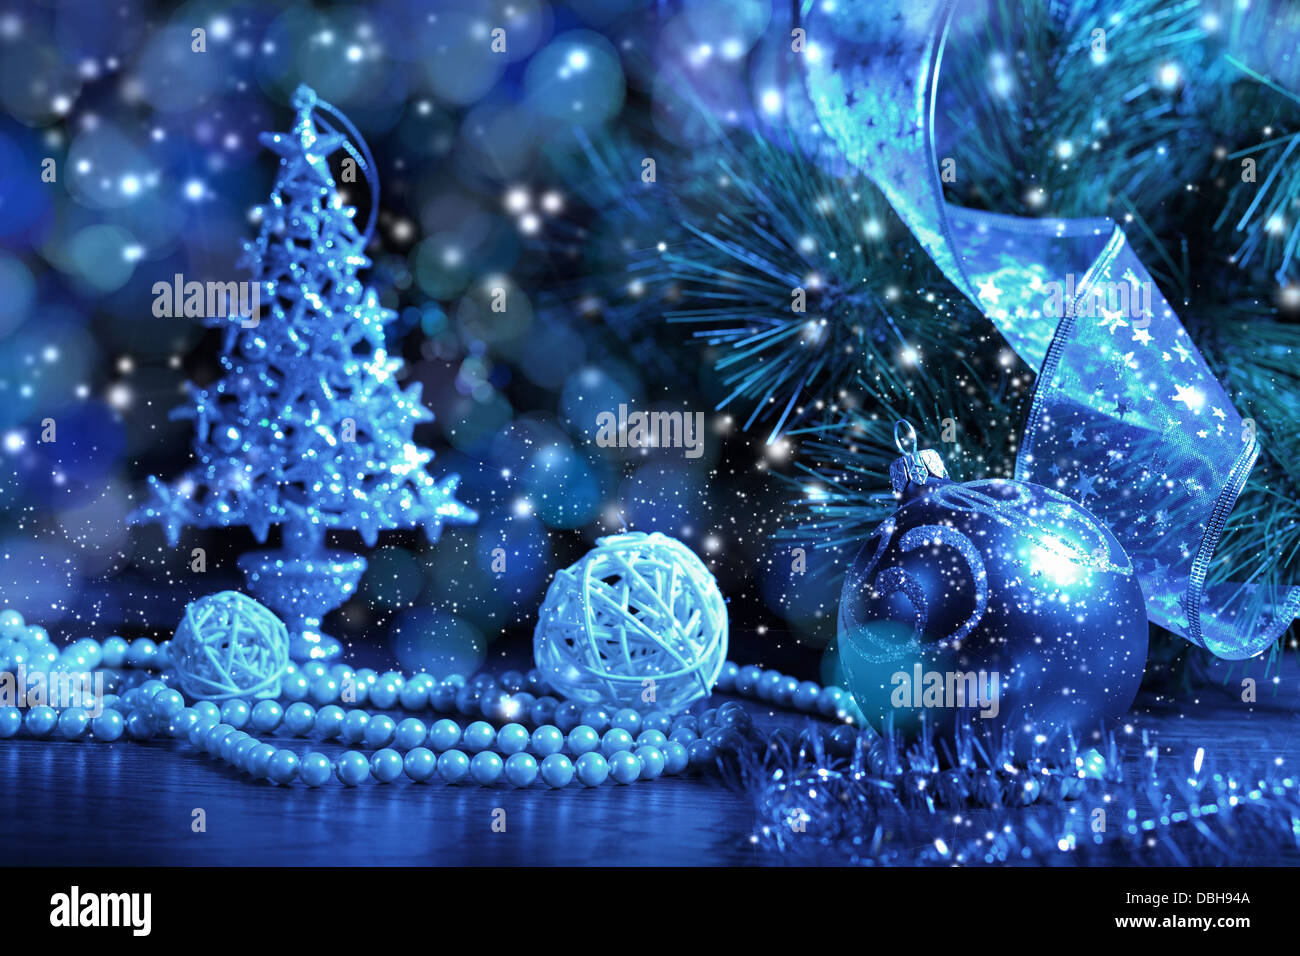 Blue Christmas collage Stock Photo - Alamy